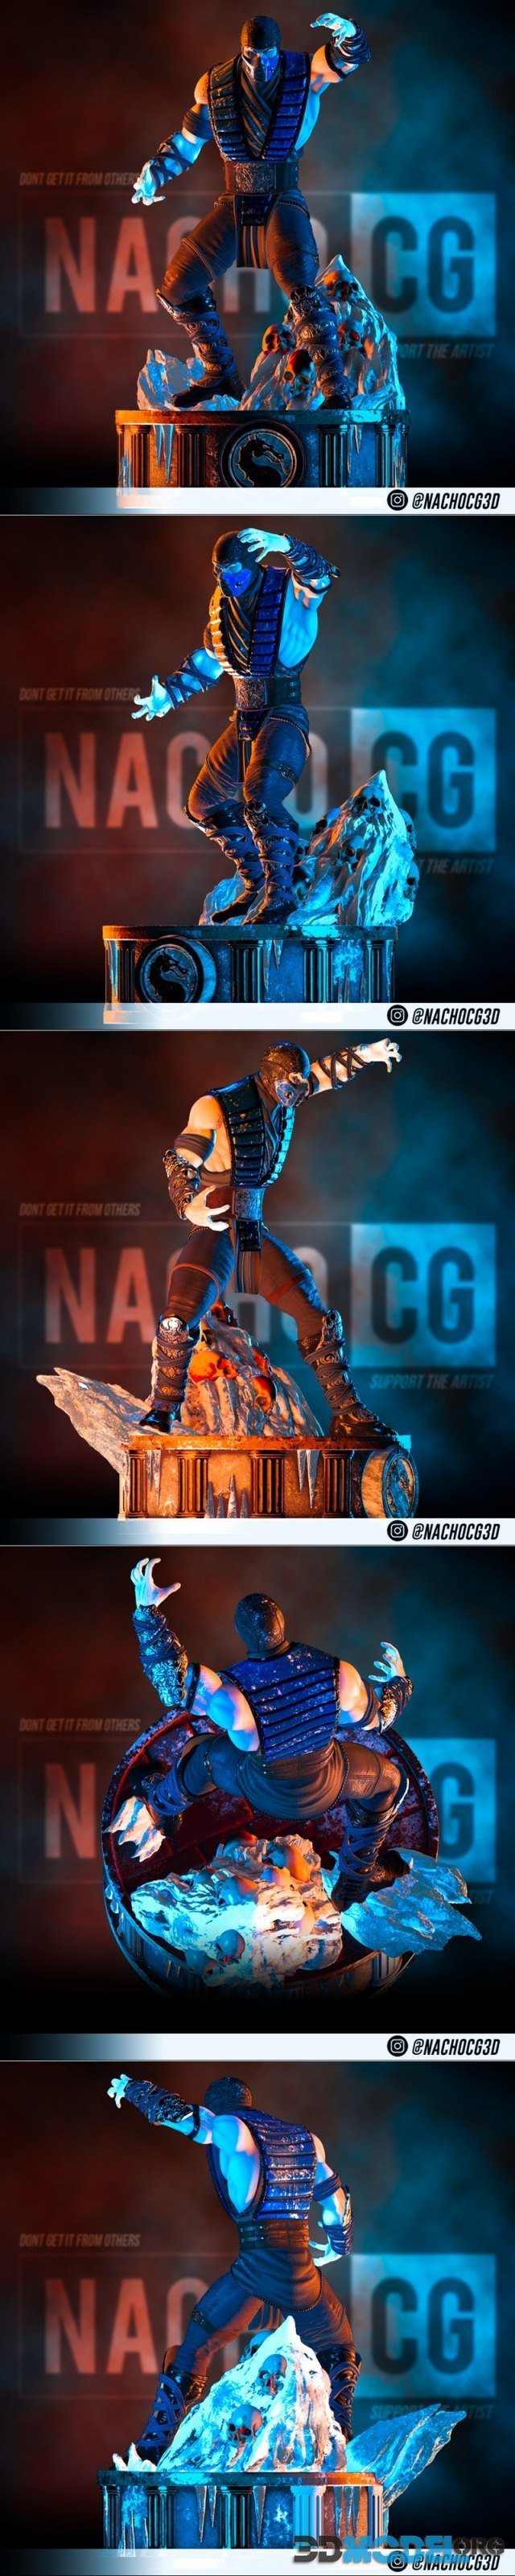 Nacho CG - Sub Zero from MK – Printable